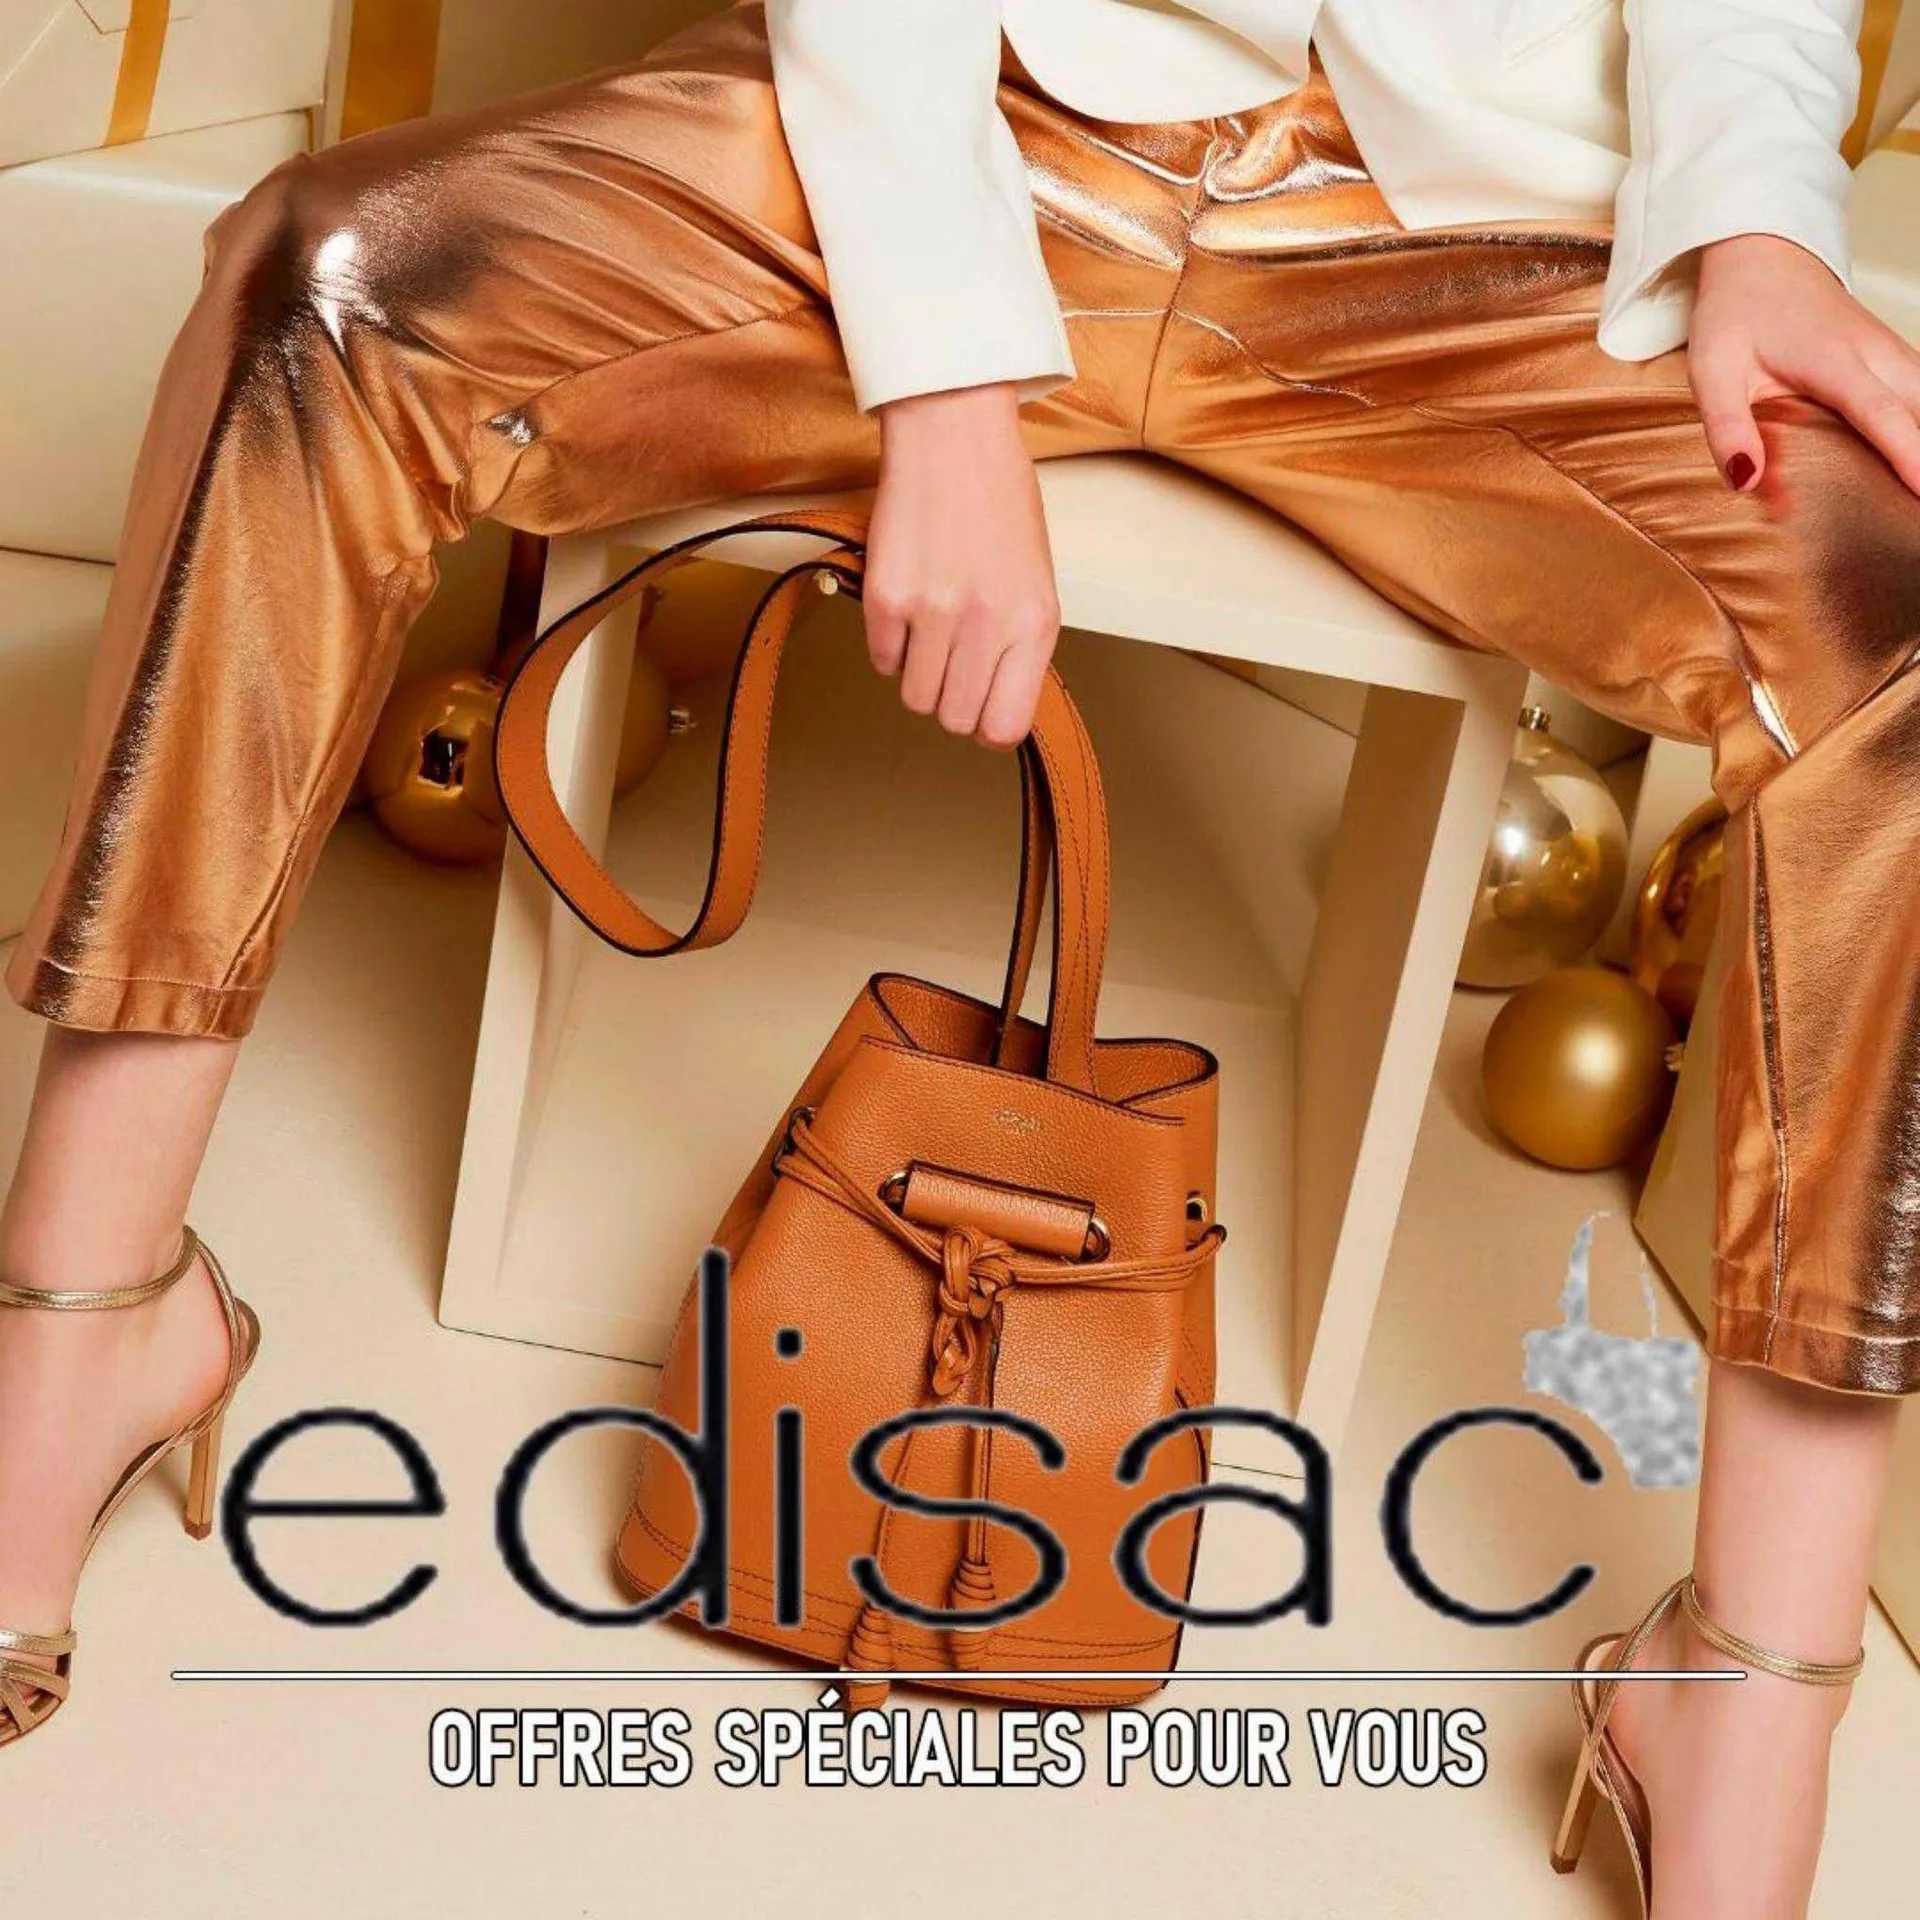 Catalogue Edisac - 1